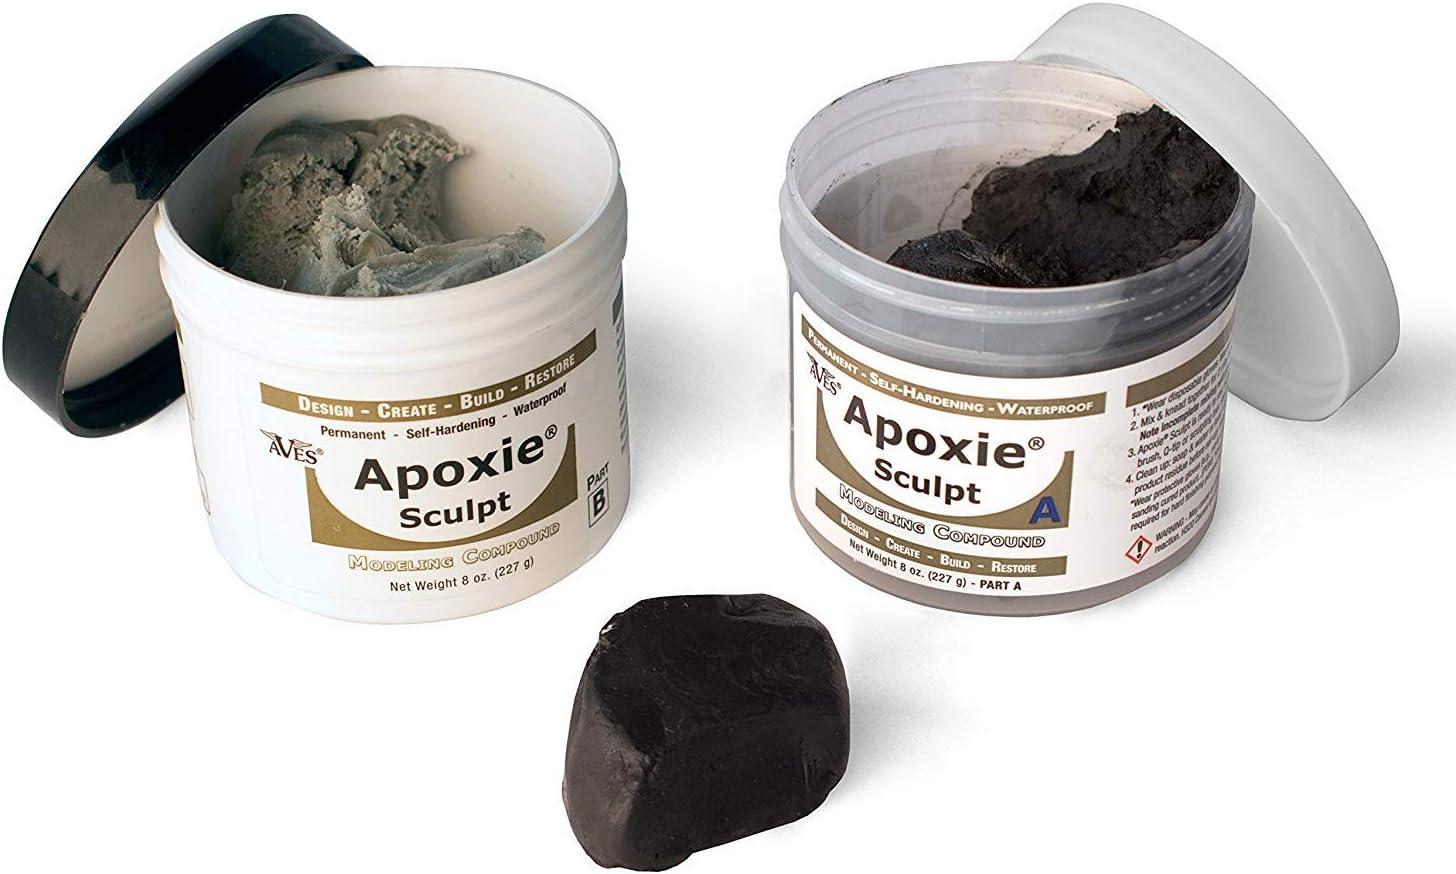 Aves Apoxie Sculpt Waterproof Air Dry Clay for Sculpting & Repairs